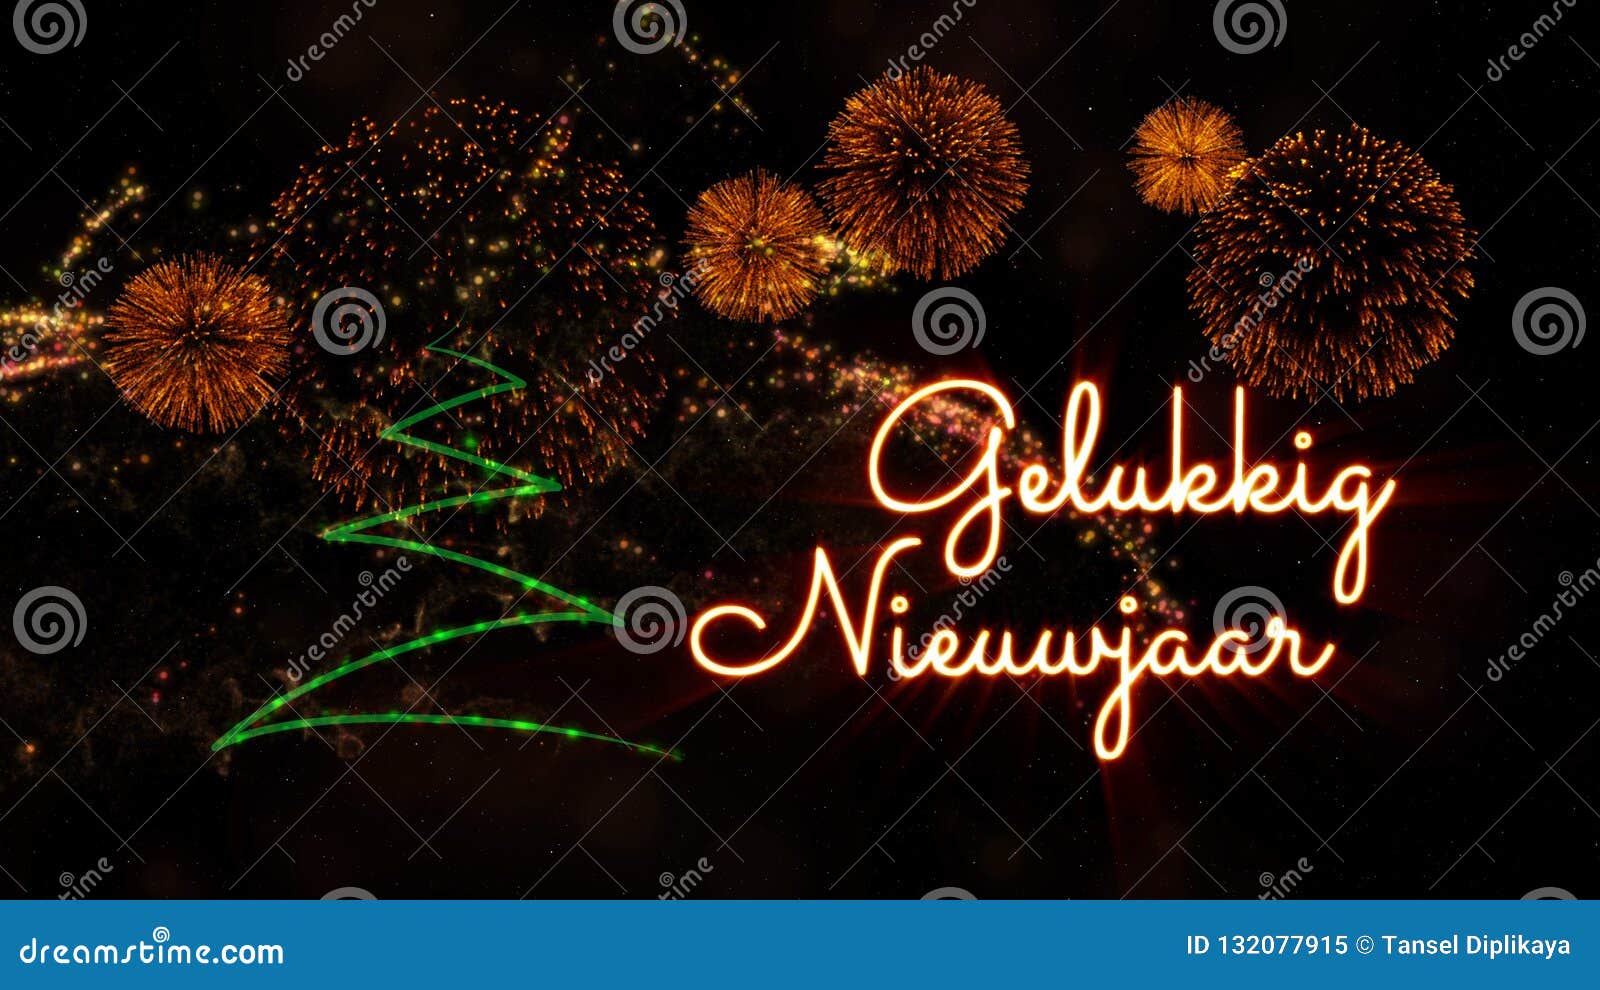 Happy New Year Text In Dutch Gelukkig Nieuwjaar Over Pine Tree And  Fireworks Stock Image - Image of tree, title: 132077915